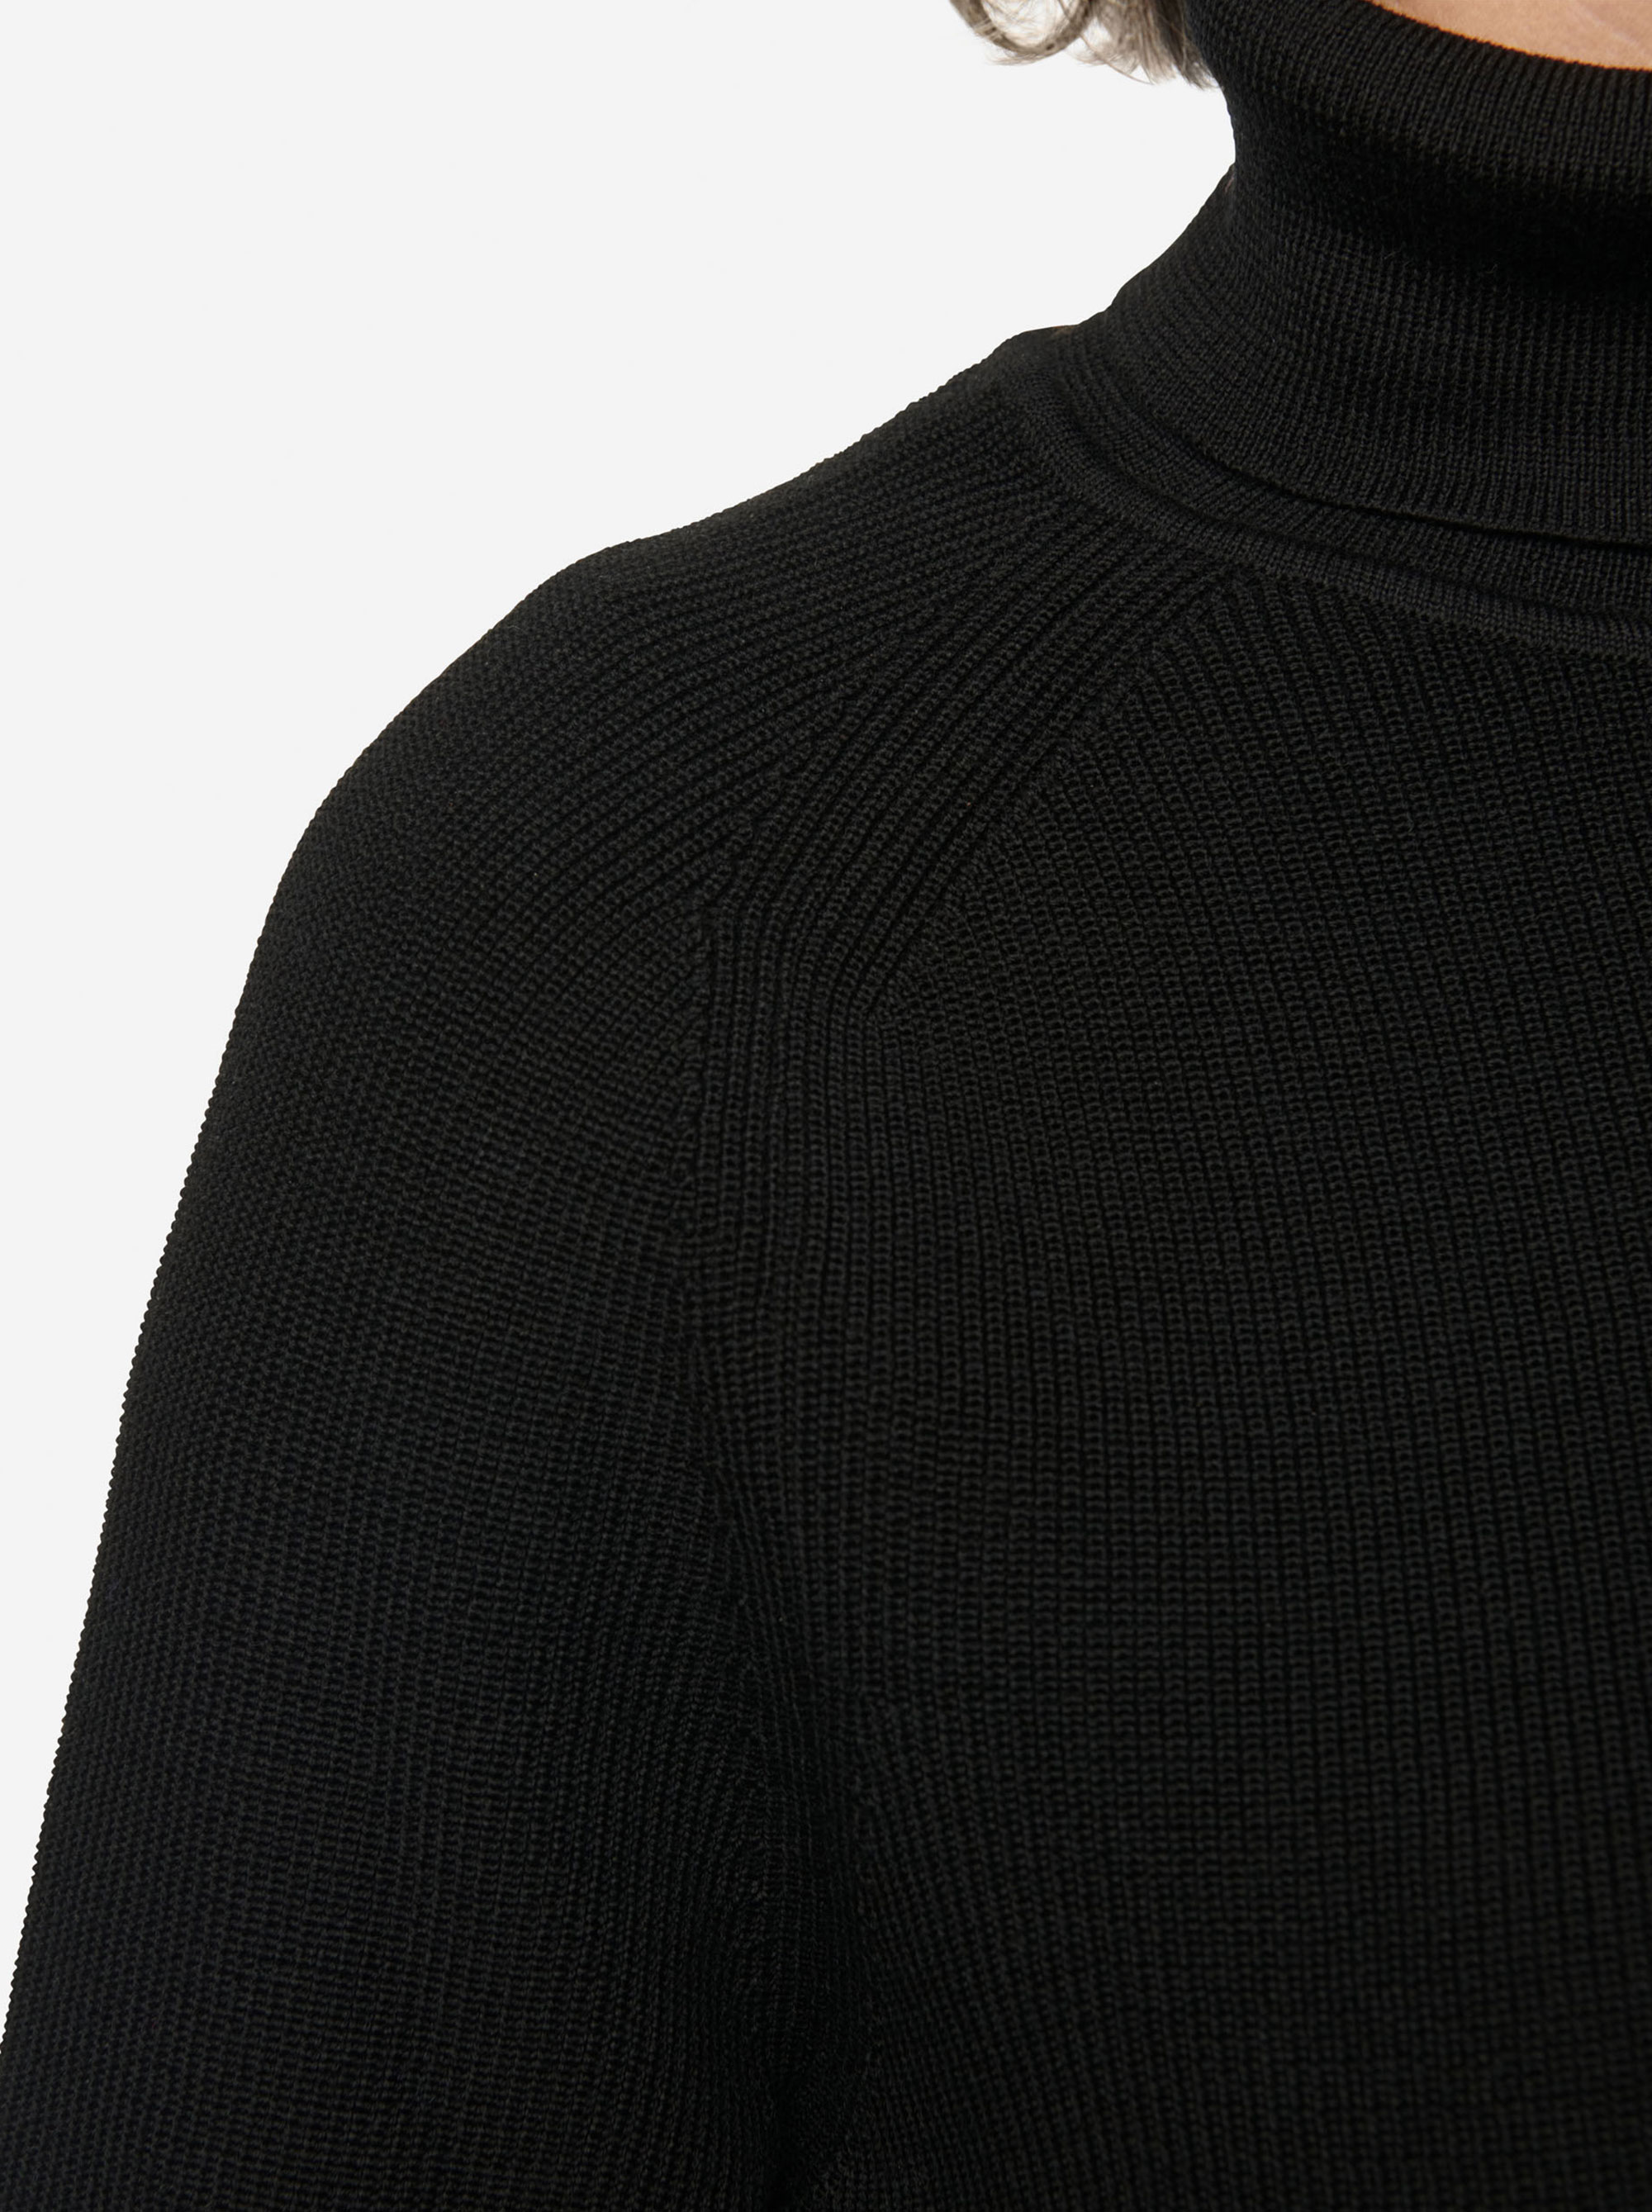 påske peddling Ja The Turtleneck Sweater in Black · Teym